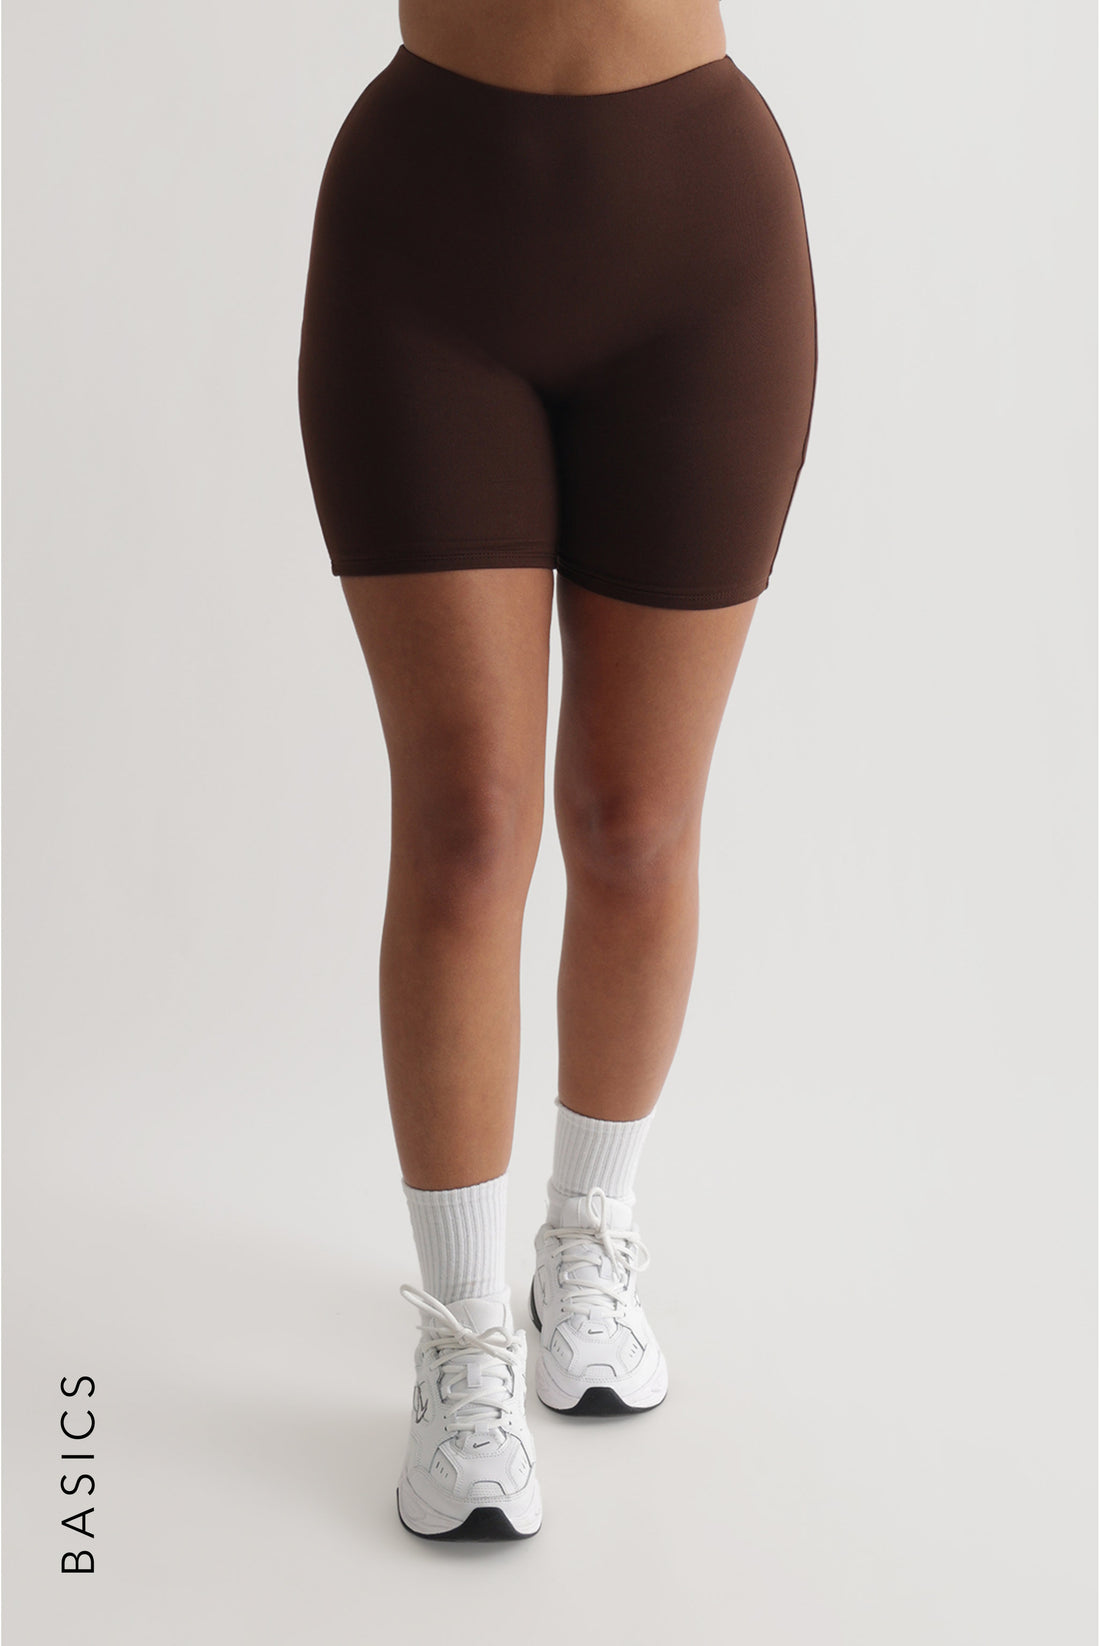 Pro Technical Biker Shorts 8" - Dark Chocolate